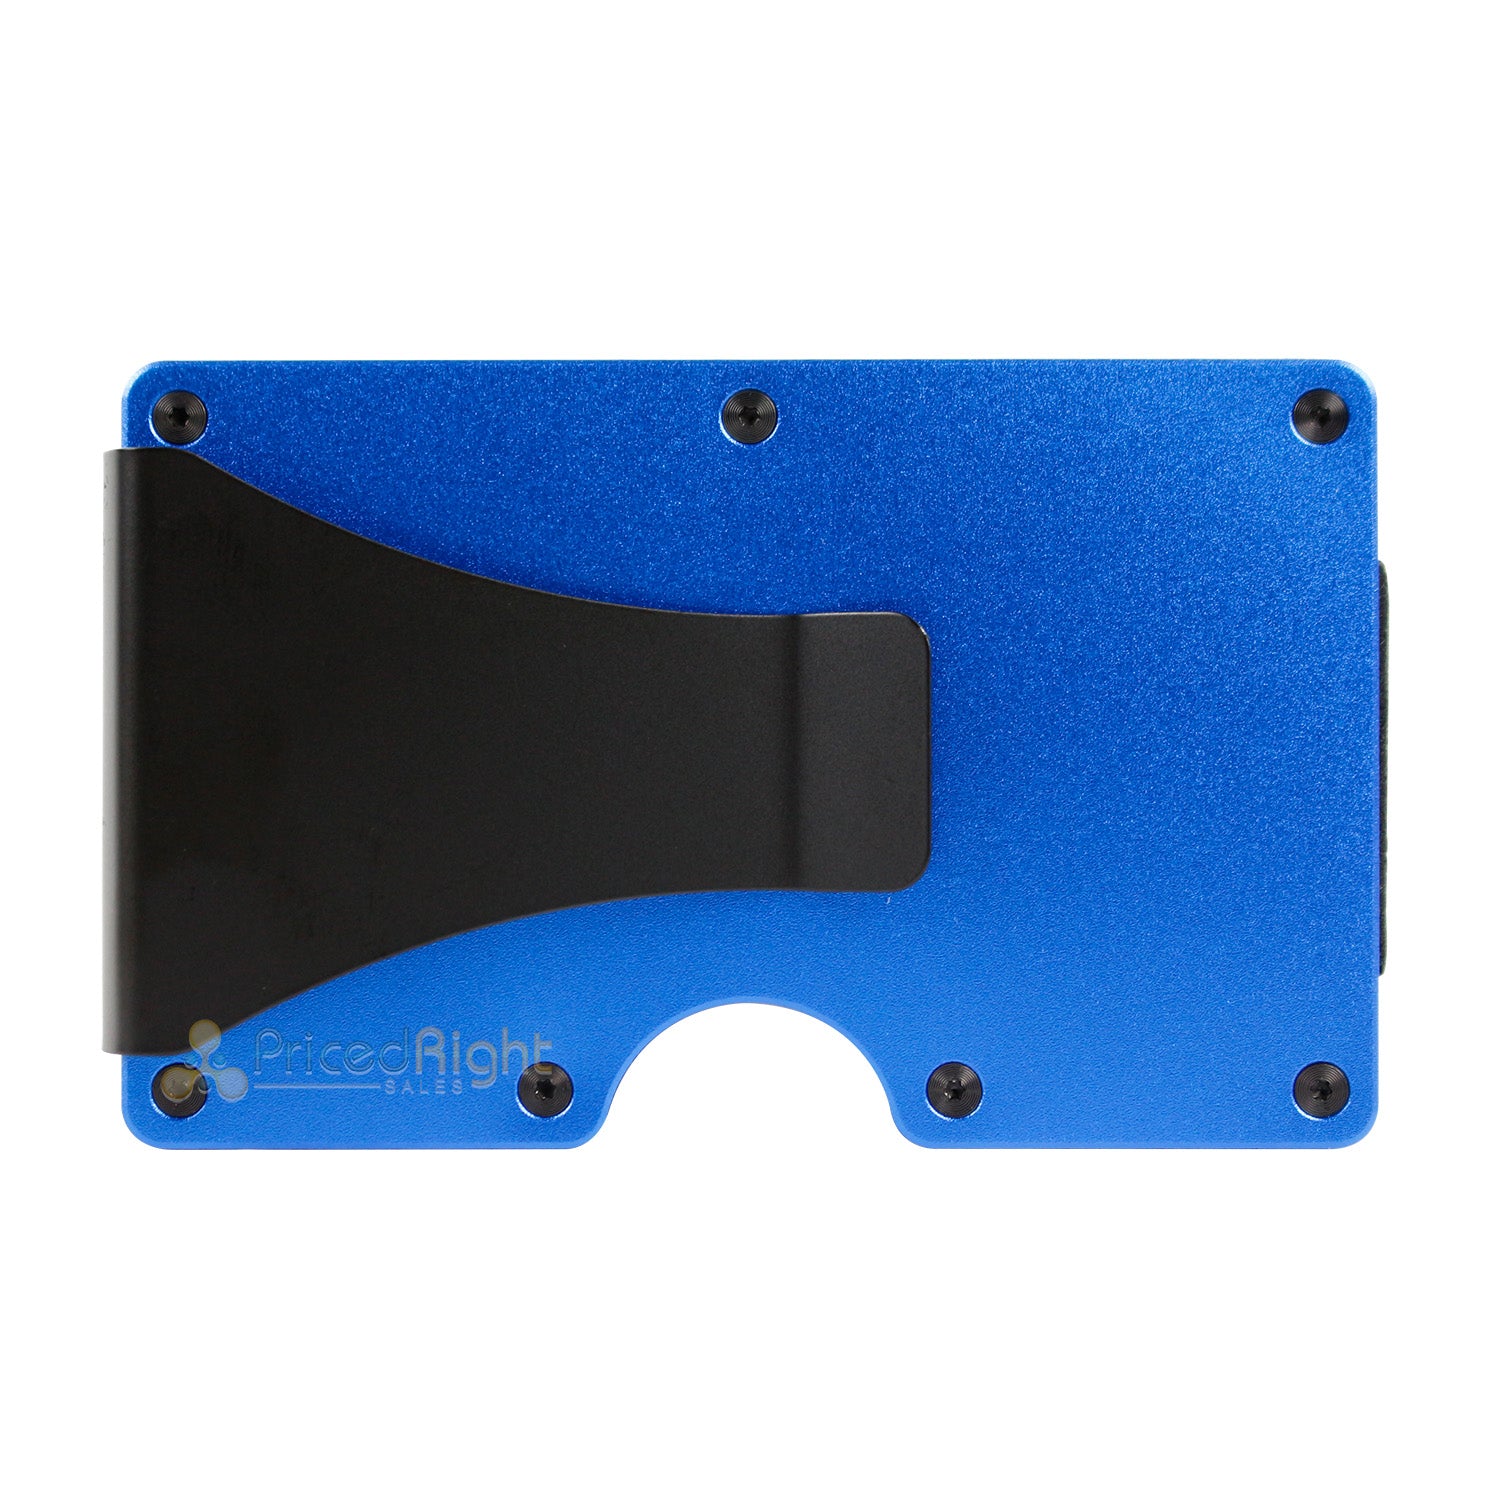 GRID Wallet Blue Aluminum Lightweight Card Holder w/ RFID Blocking Metal Panels